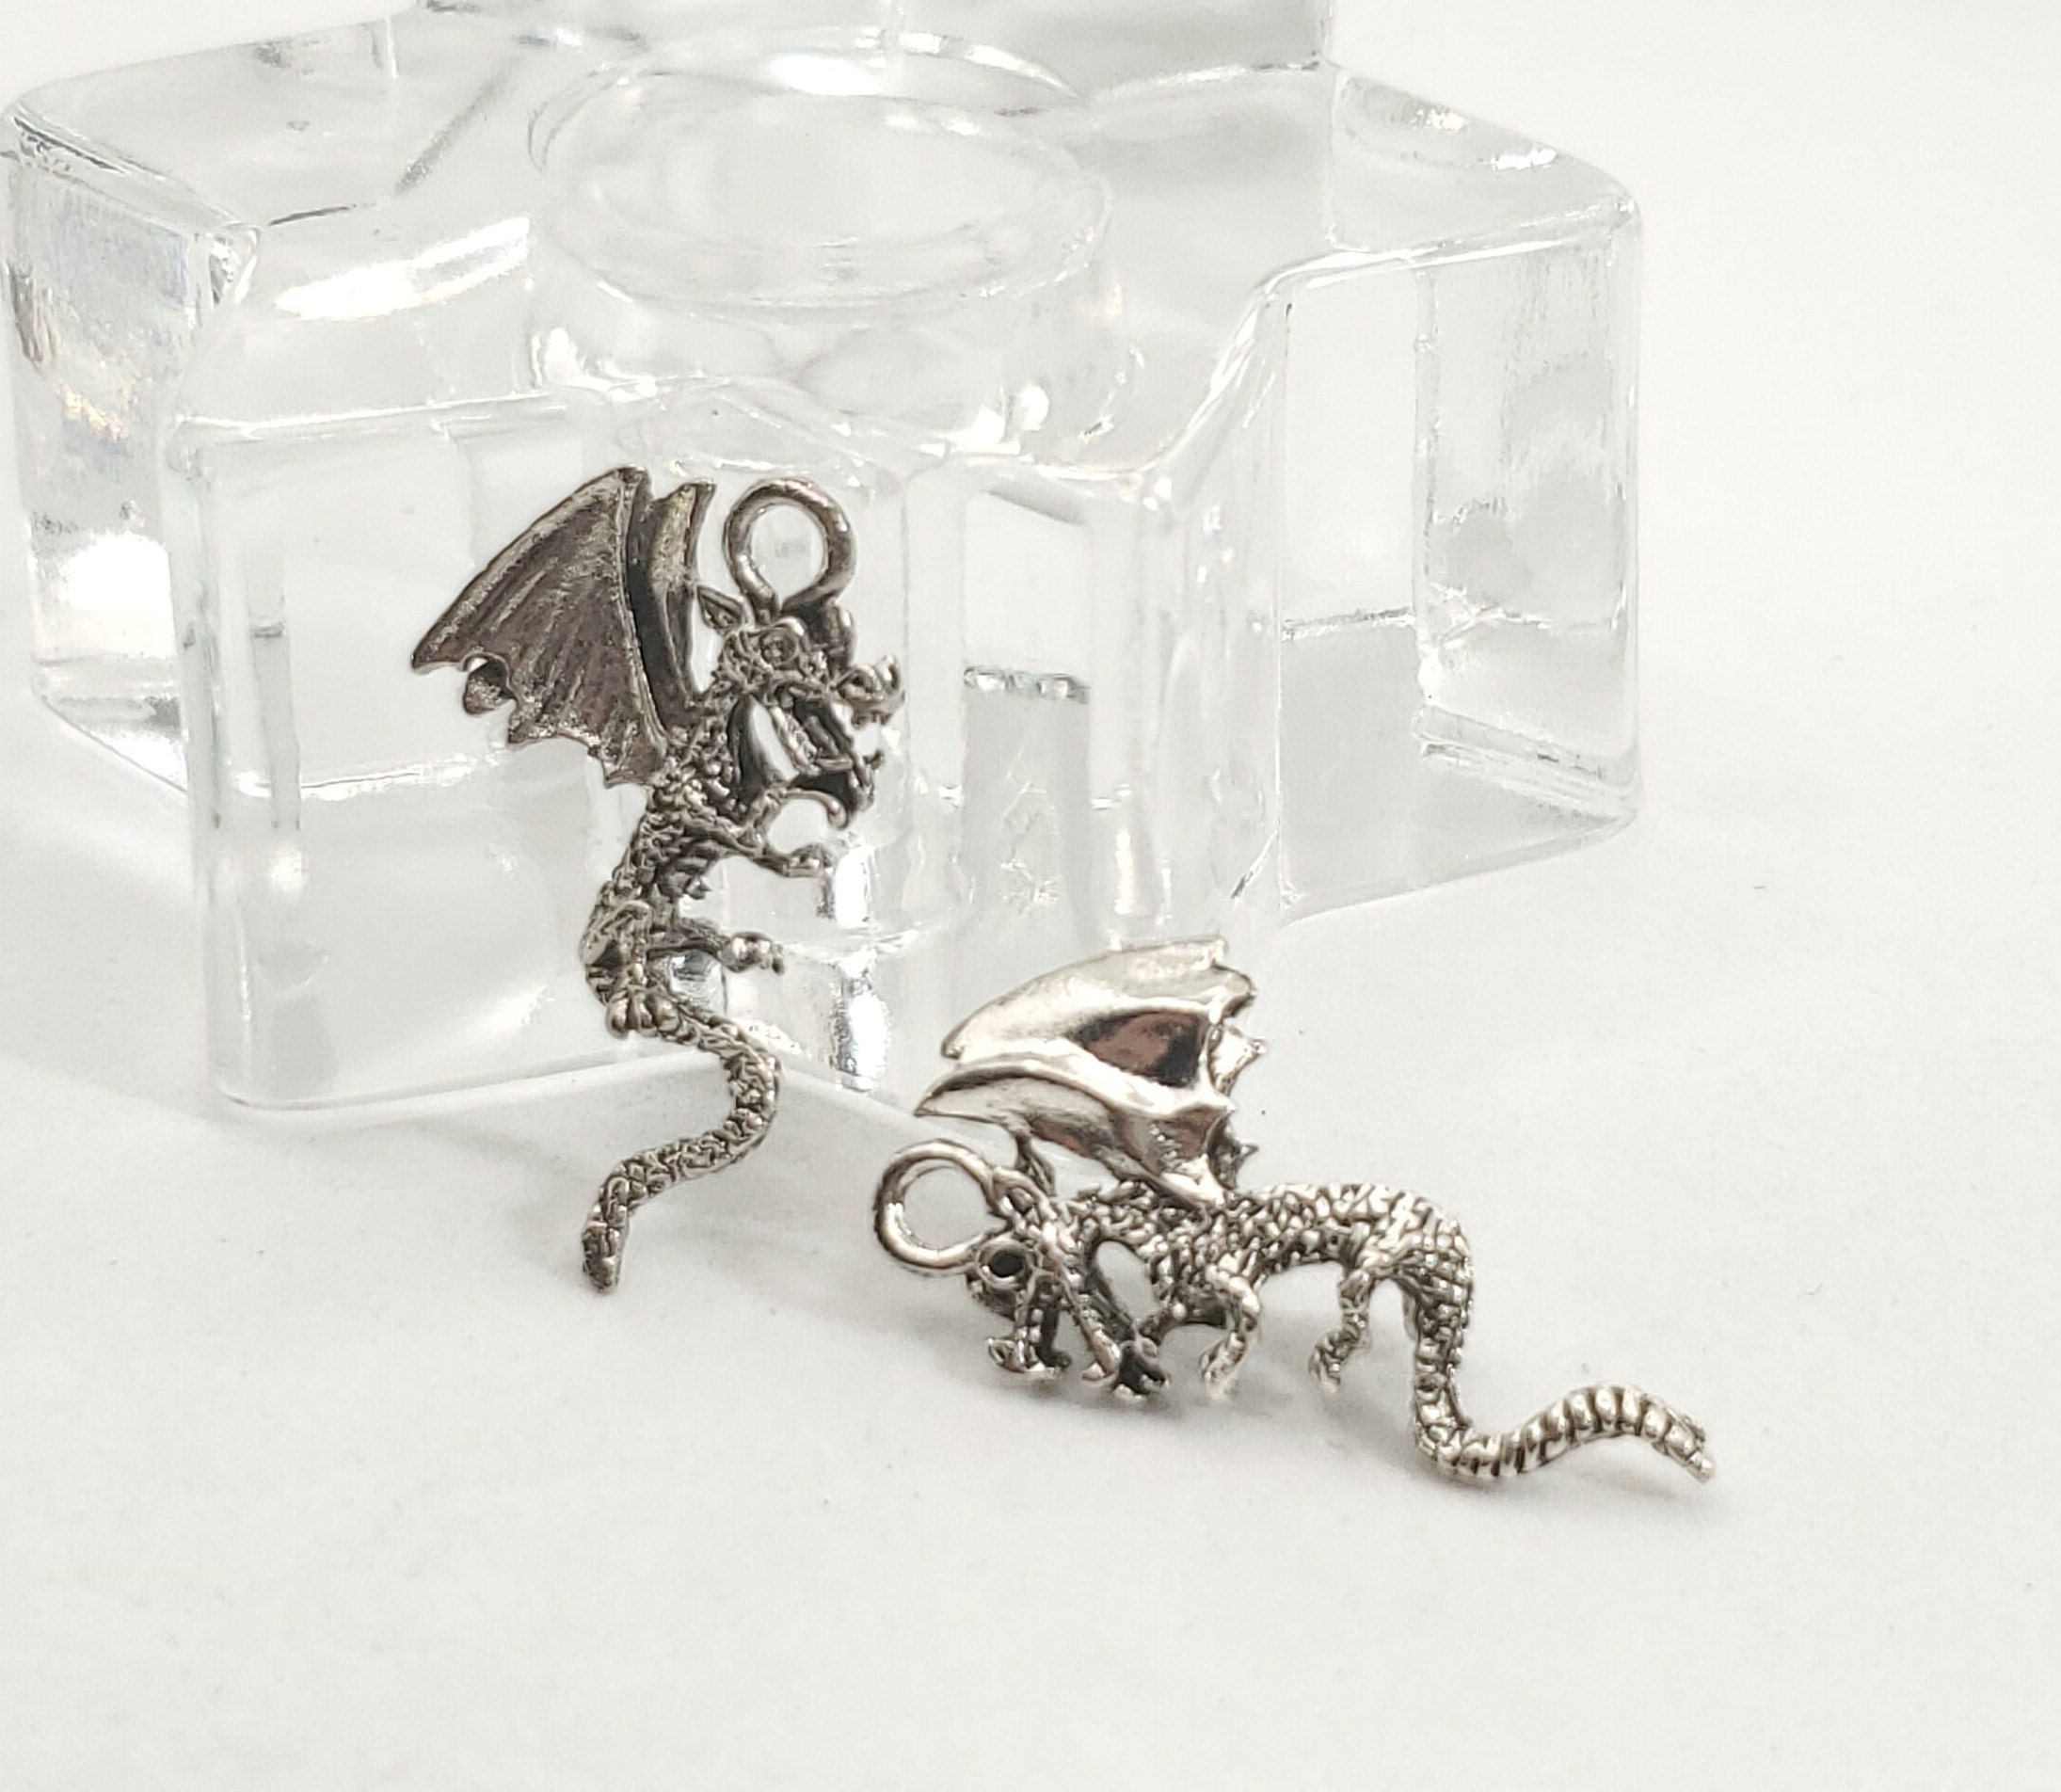 Large Dragon Charm / Pendant (2pcs / 46mm x 43mm / Tibetan Silver) Gothic  Jewelry Legendary Creature Myth Medieval Knight Fantasy CHM866